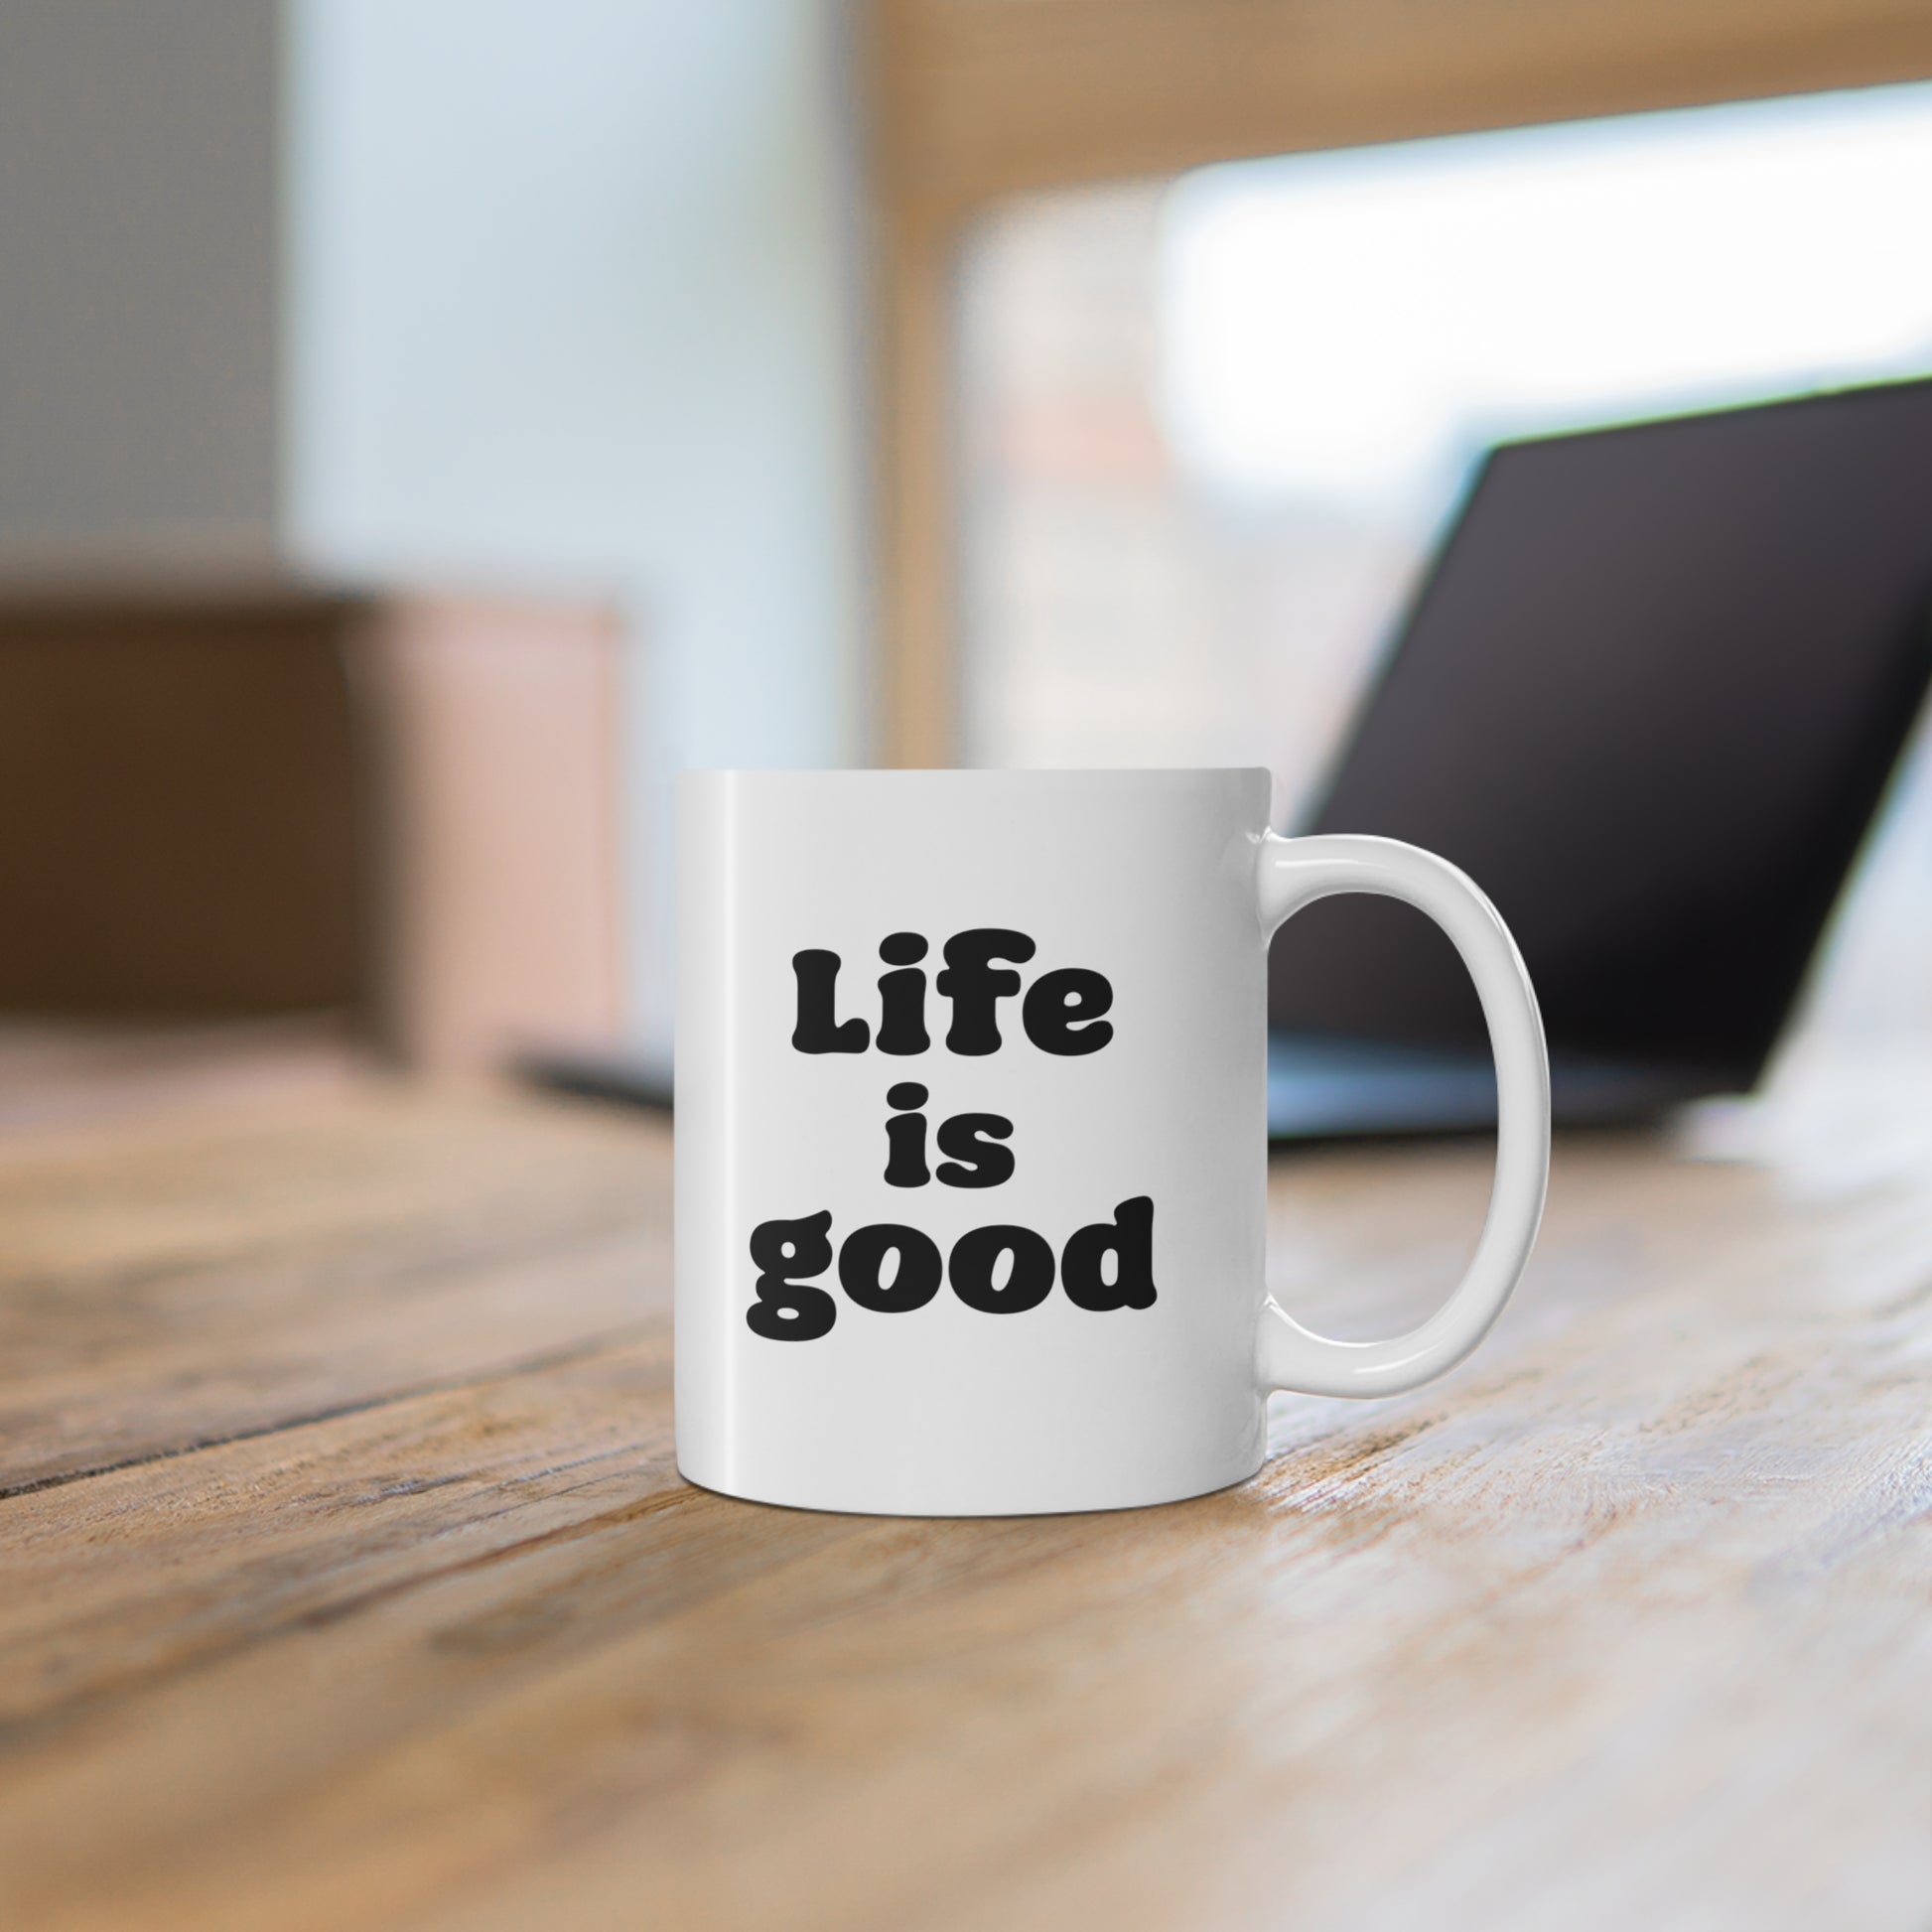 11oz ceramic mug with quote Life is Good